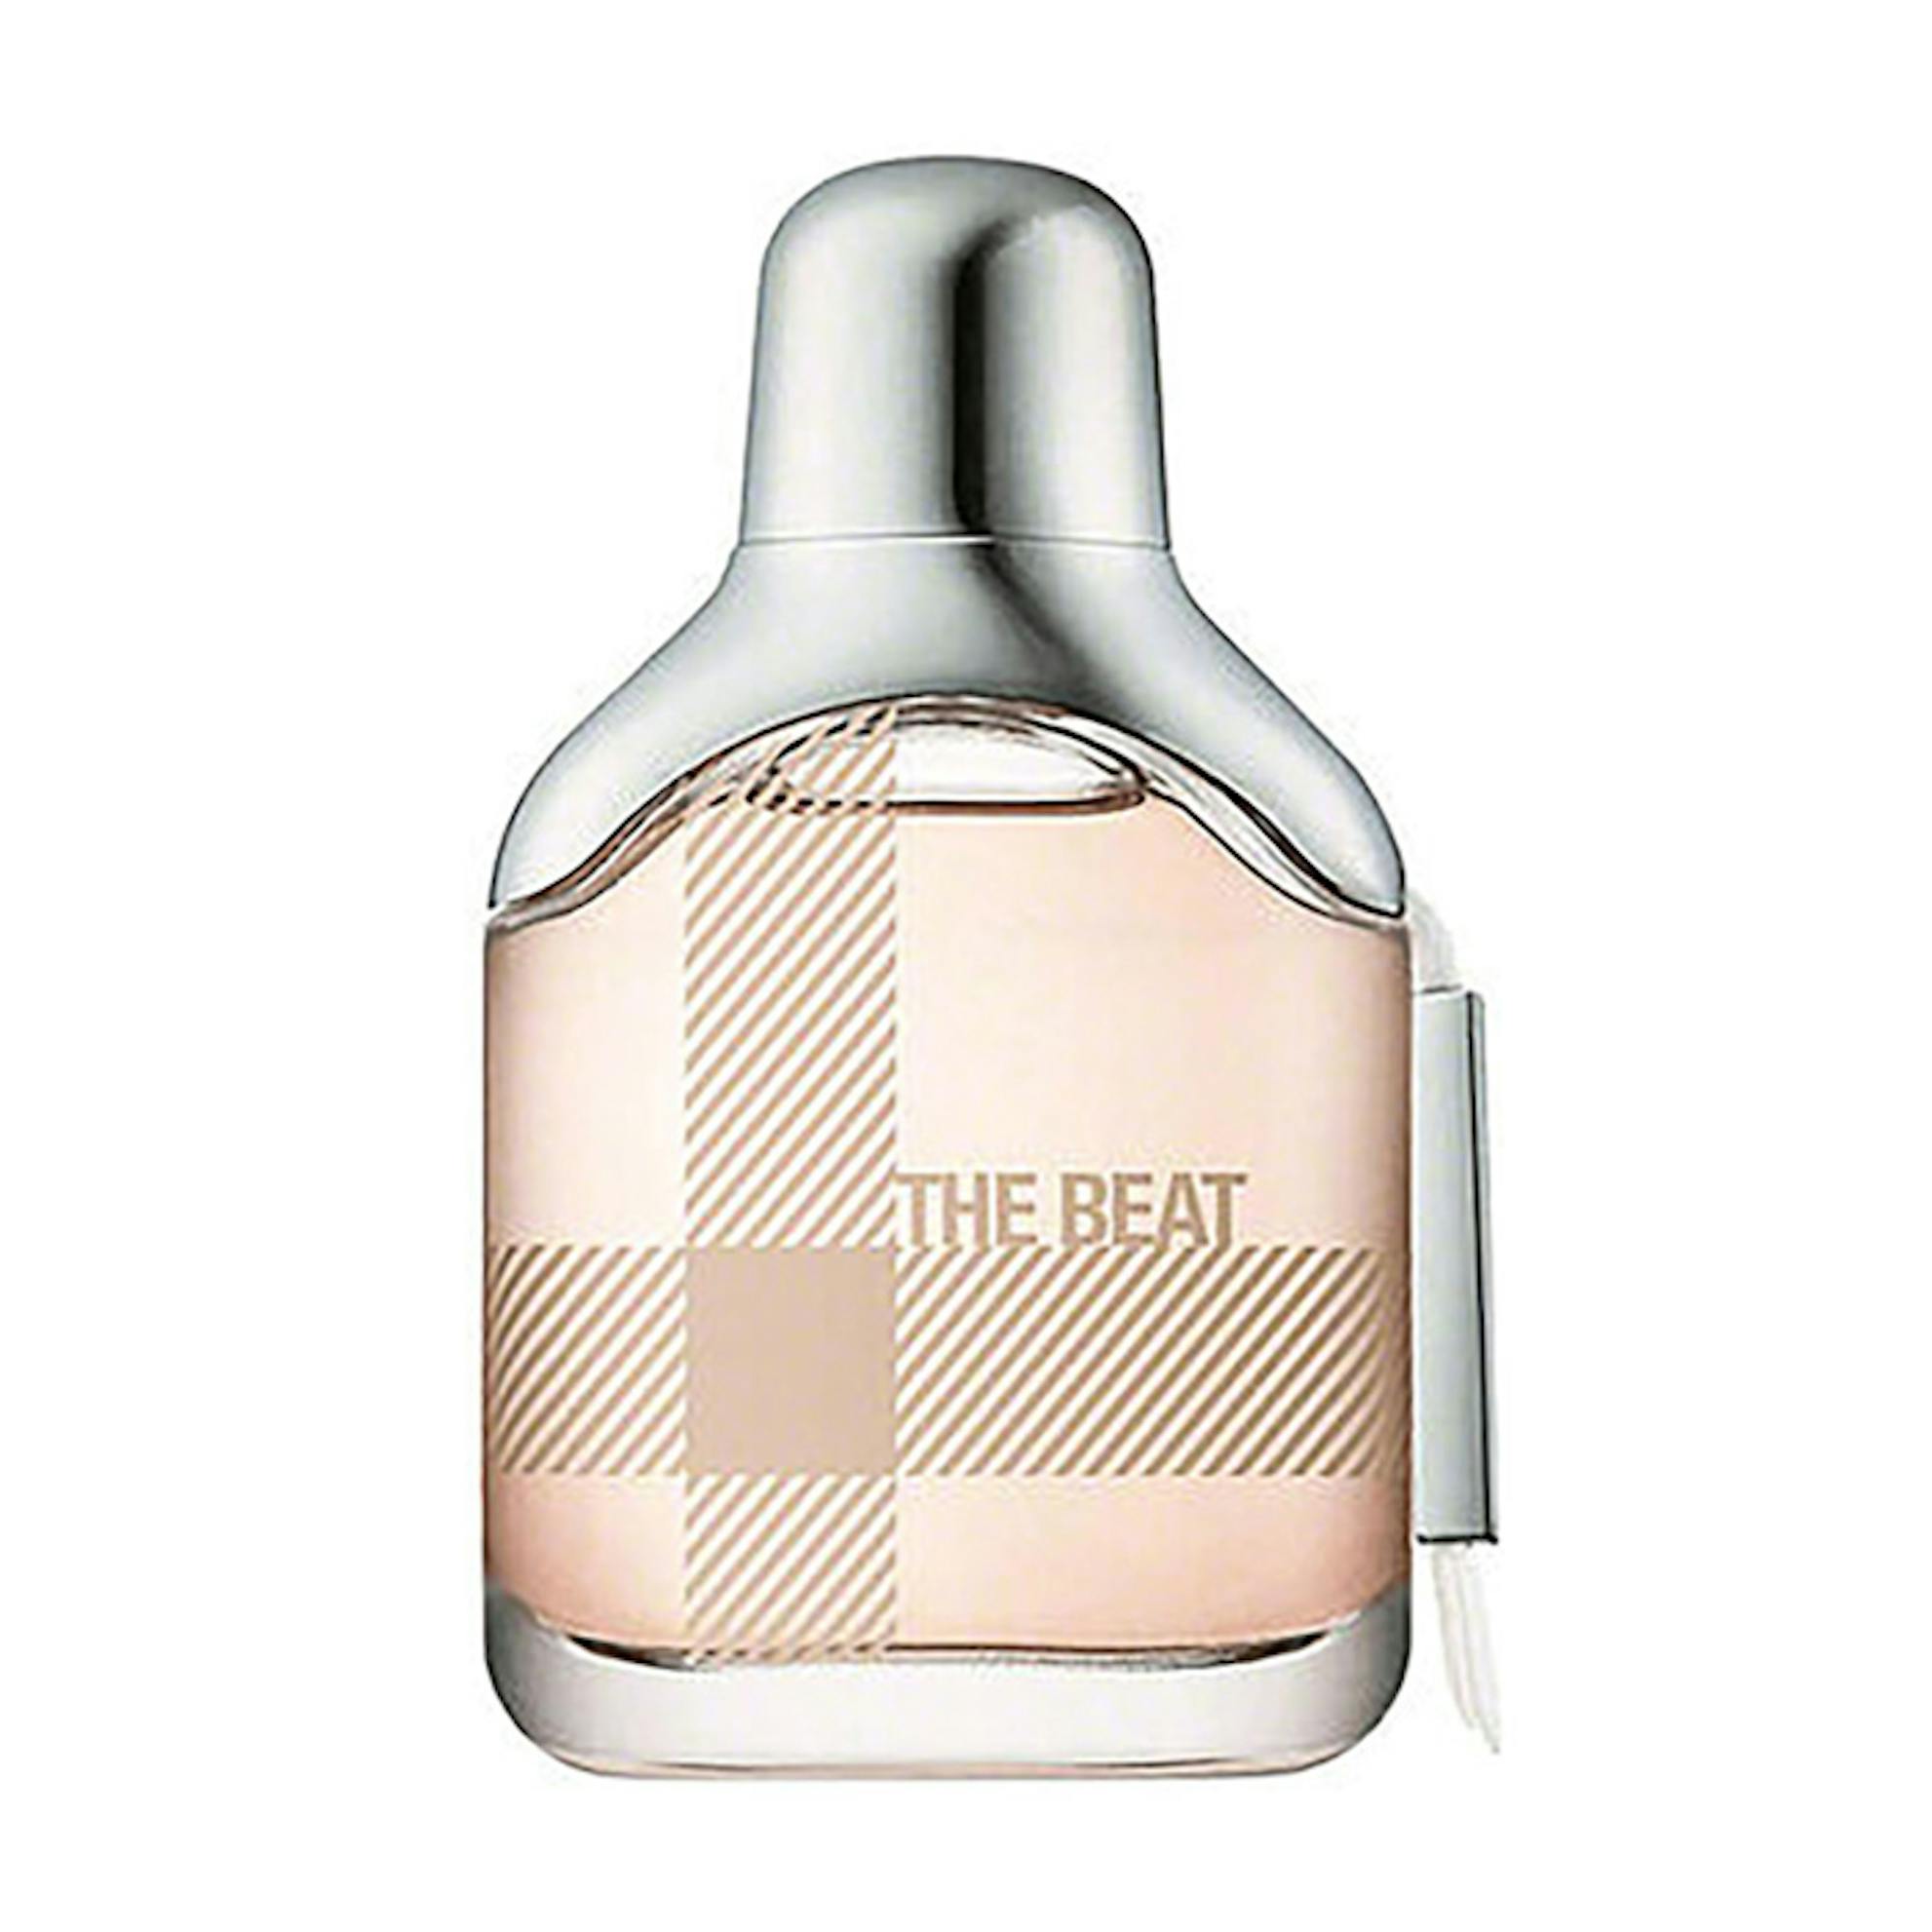 Arriba 73+ imagen burberry the beat perfume review - Viaterra.mx